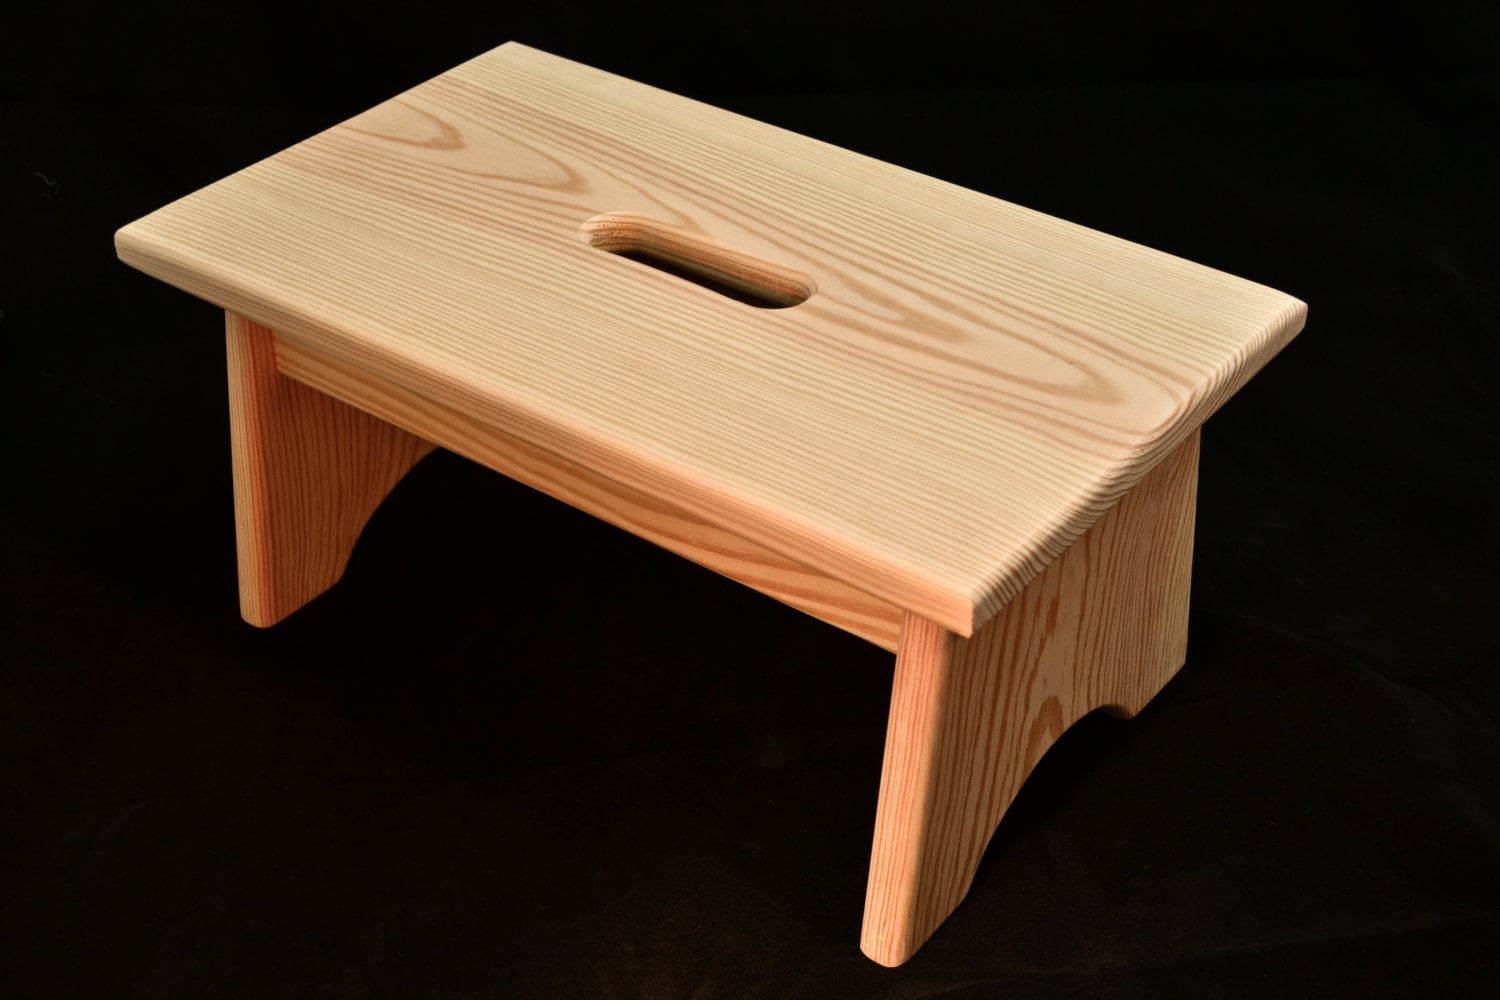 Unfinished step stool